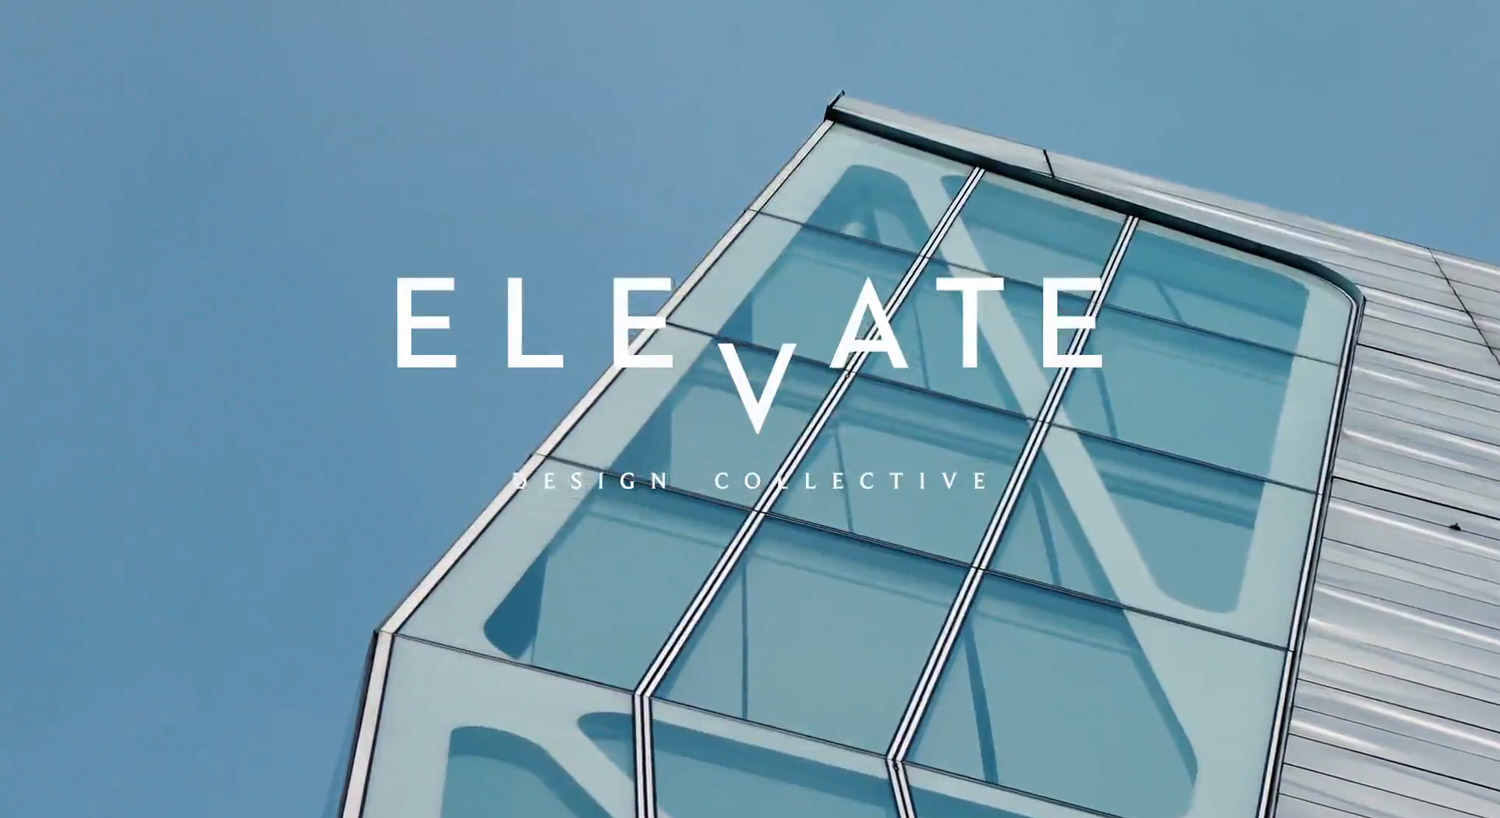 Elevate Design logo over building.